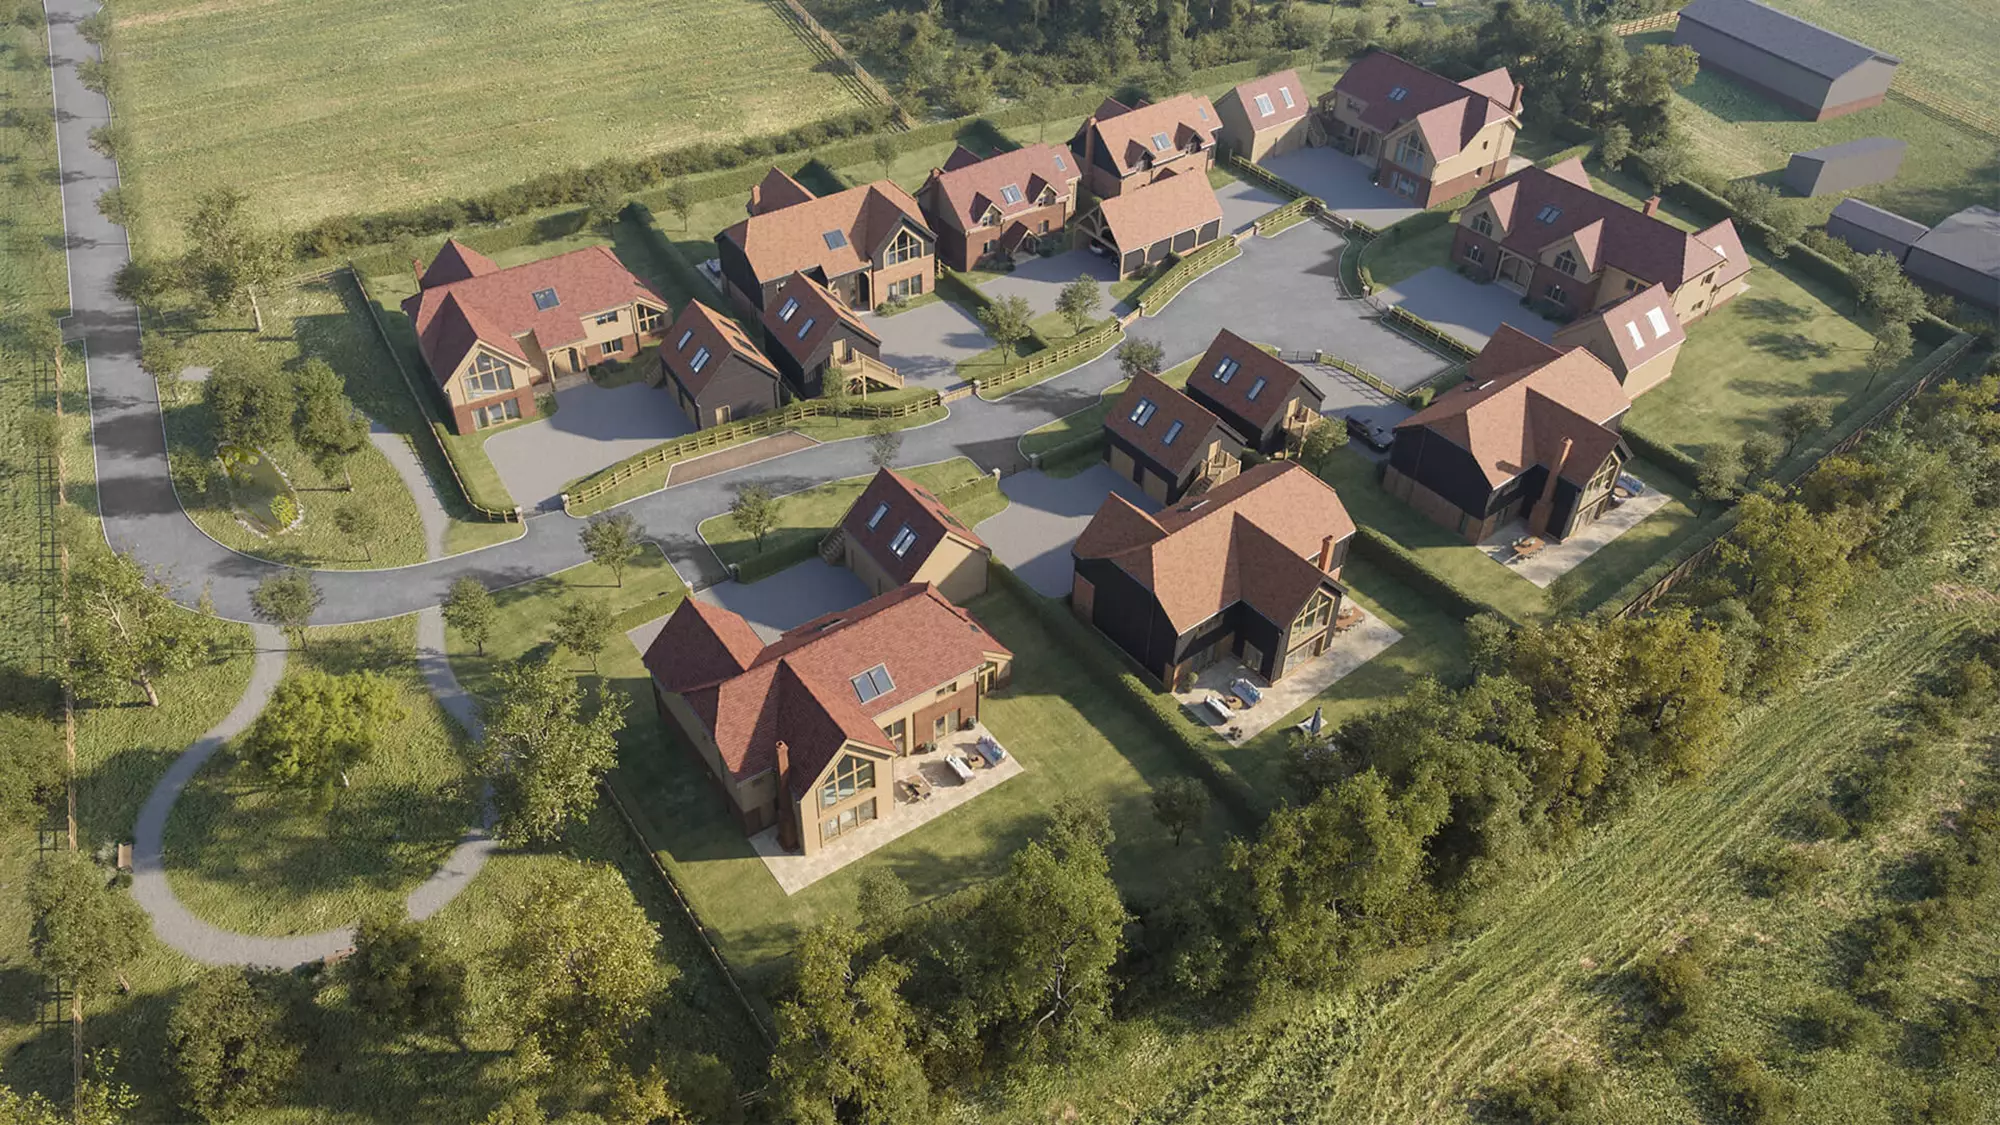 Custom Build & Self Build Homes, Biggest Community in UK